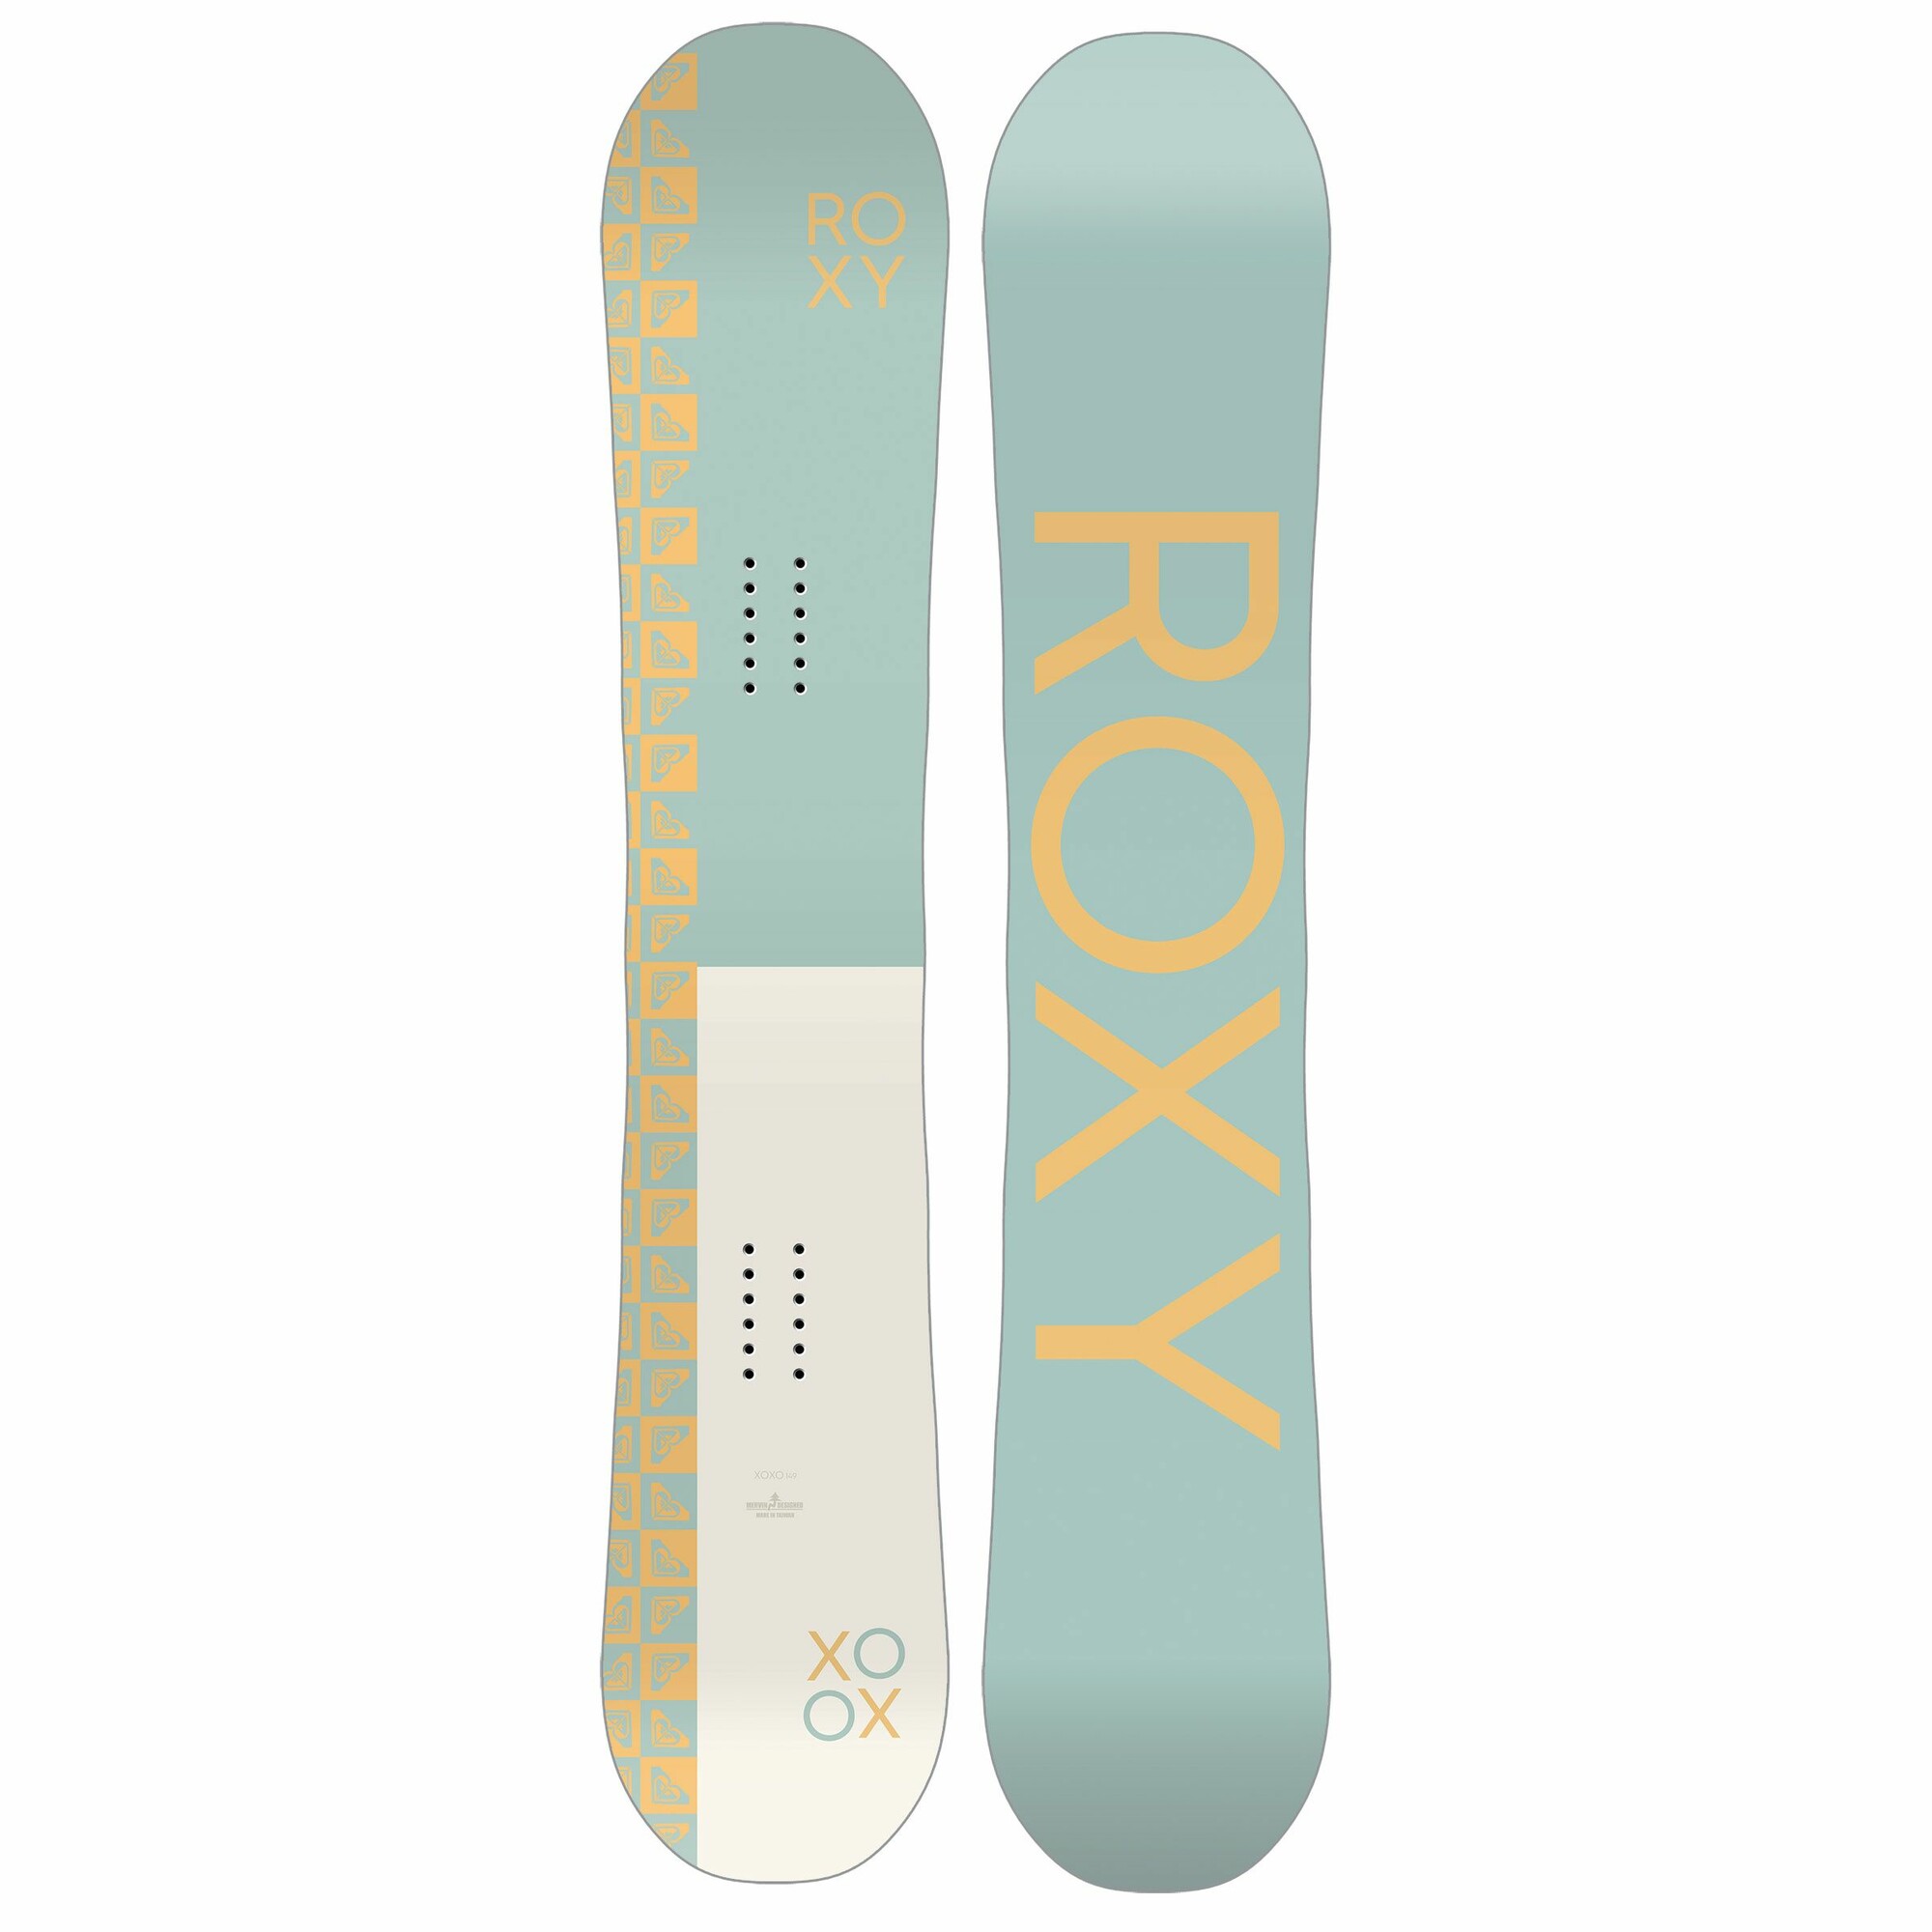 Roxy XOXO snowboard